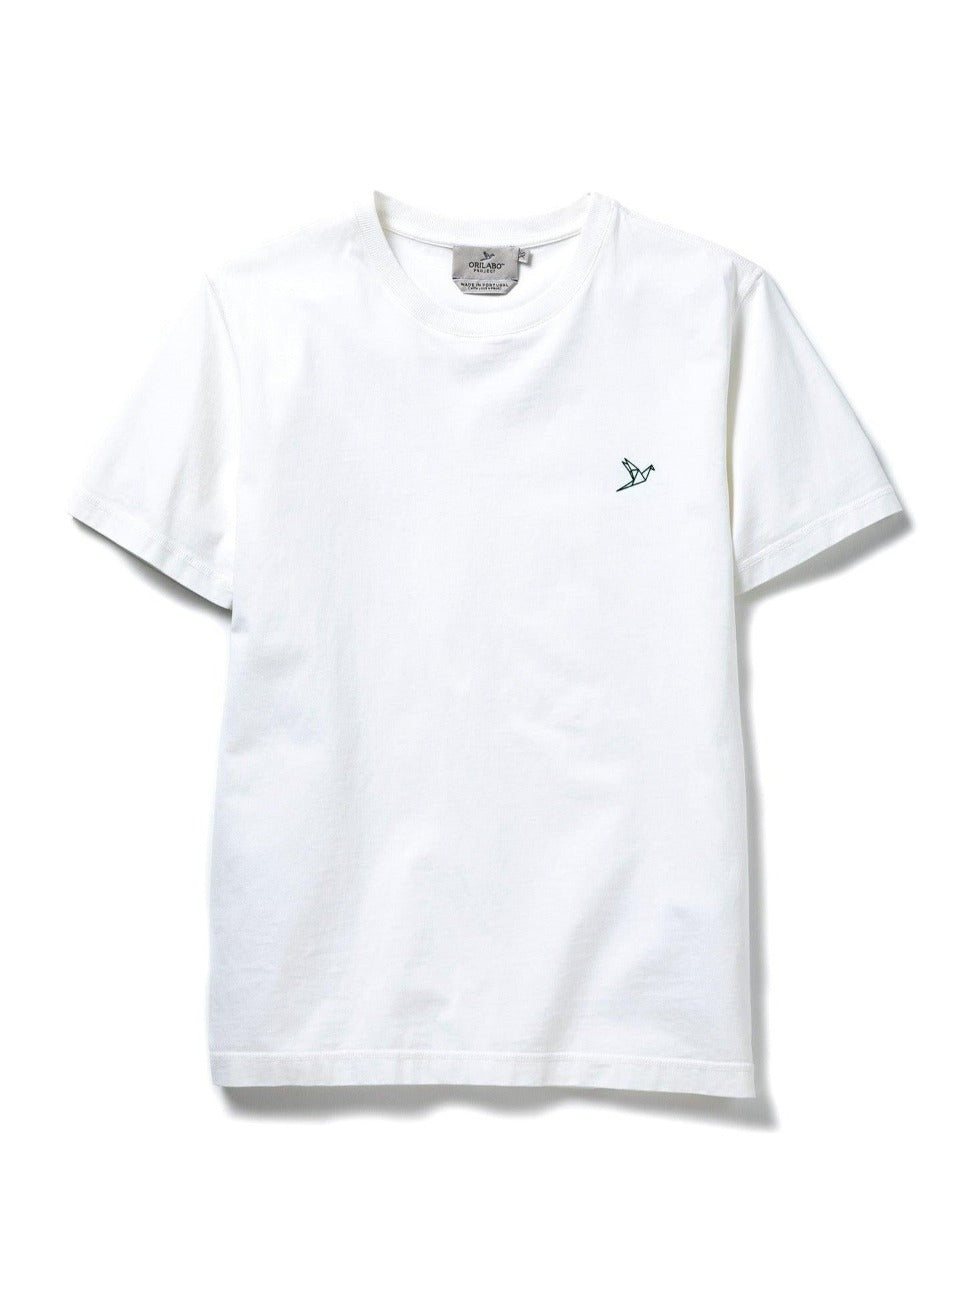 Women's Small Logo T-shirt - White - ORILABO Project